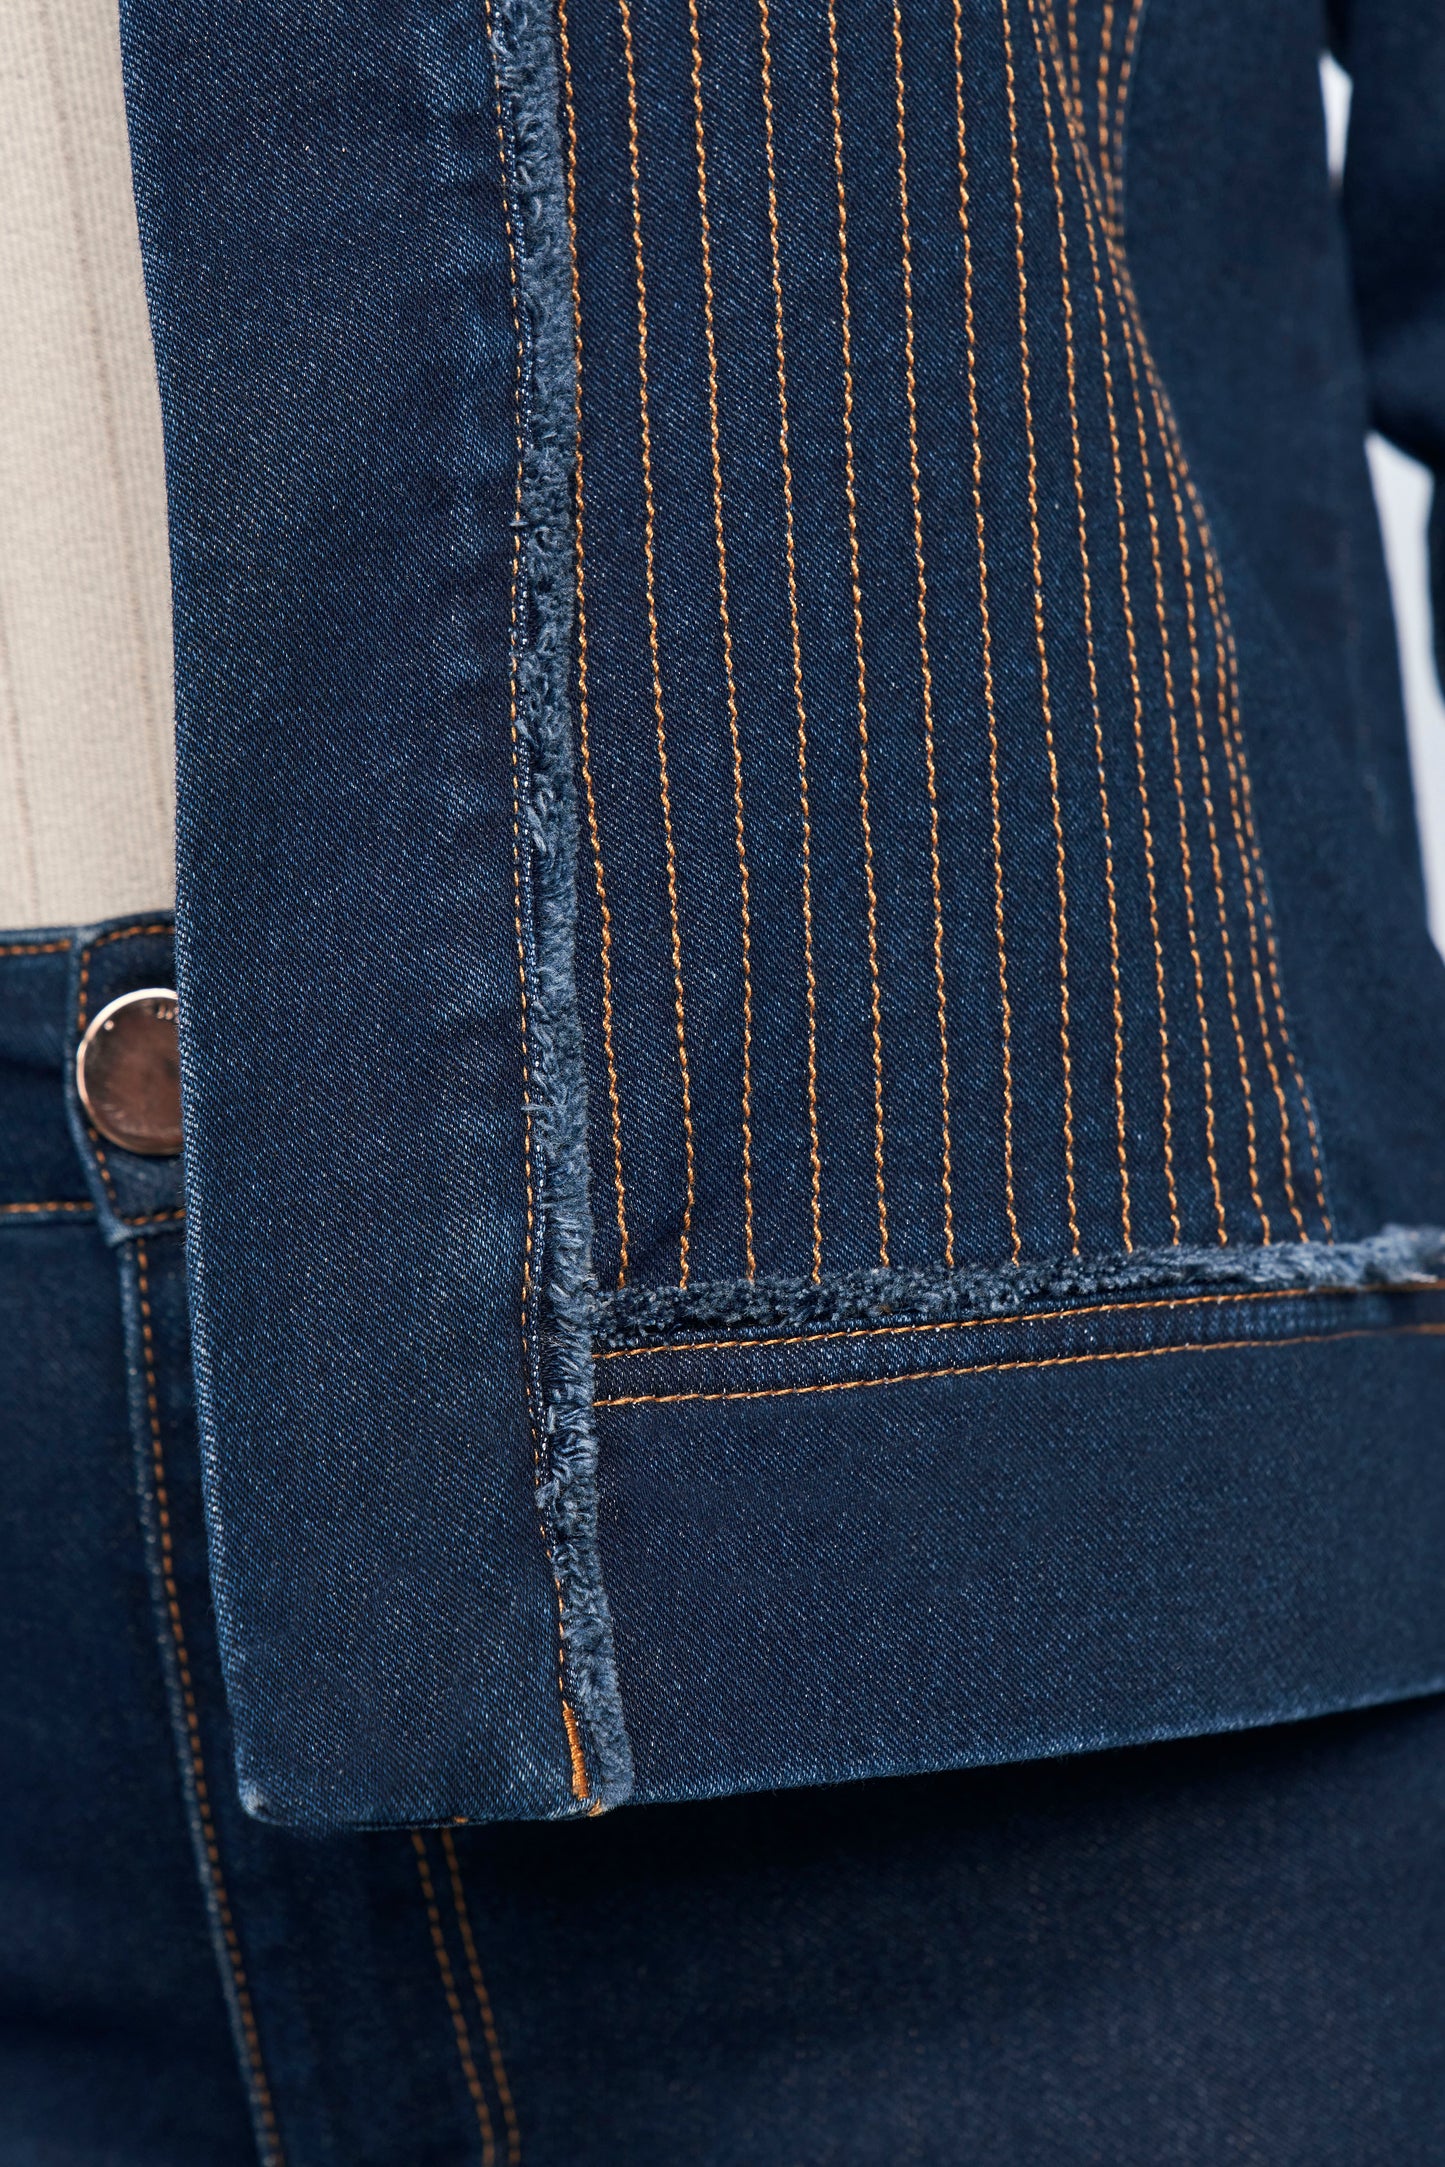 casaco jeans malha manga longa com recortes a fio